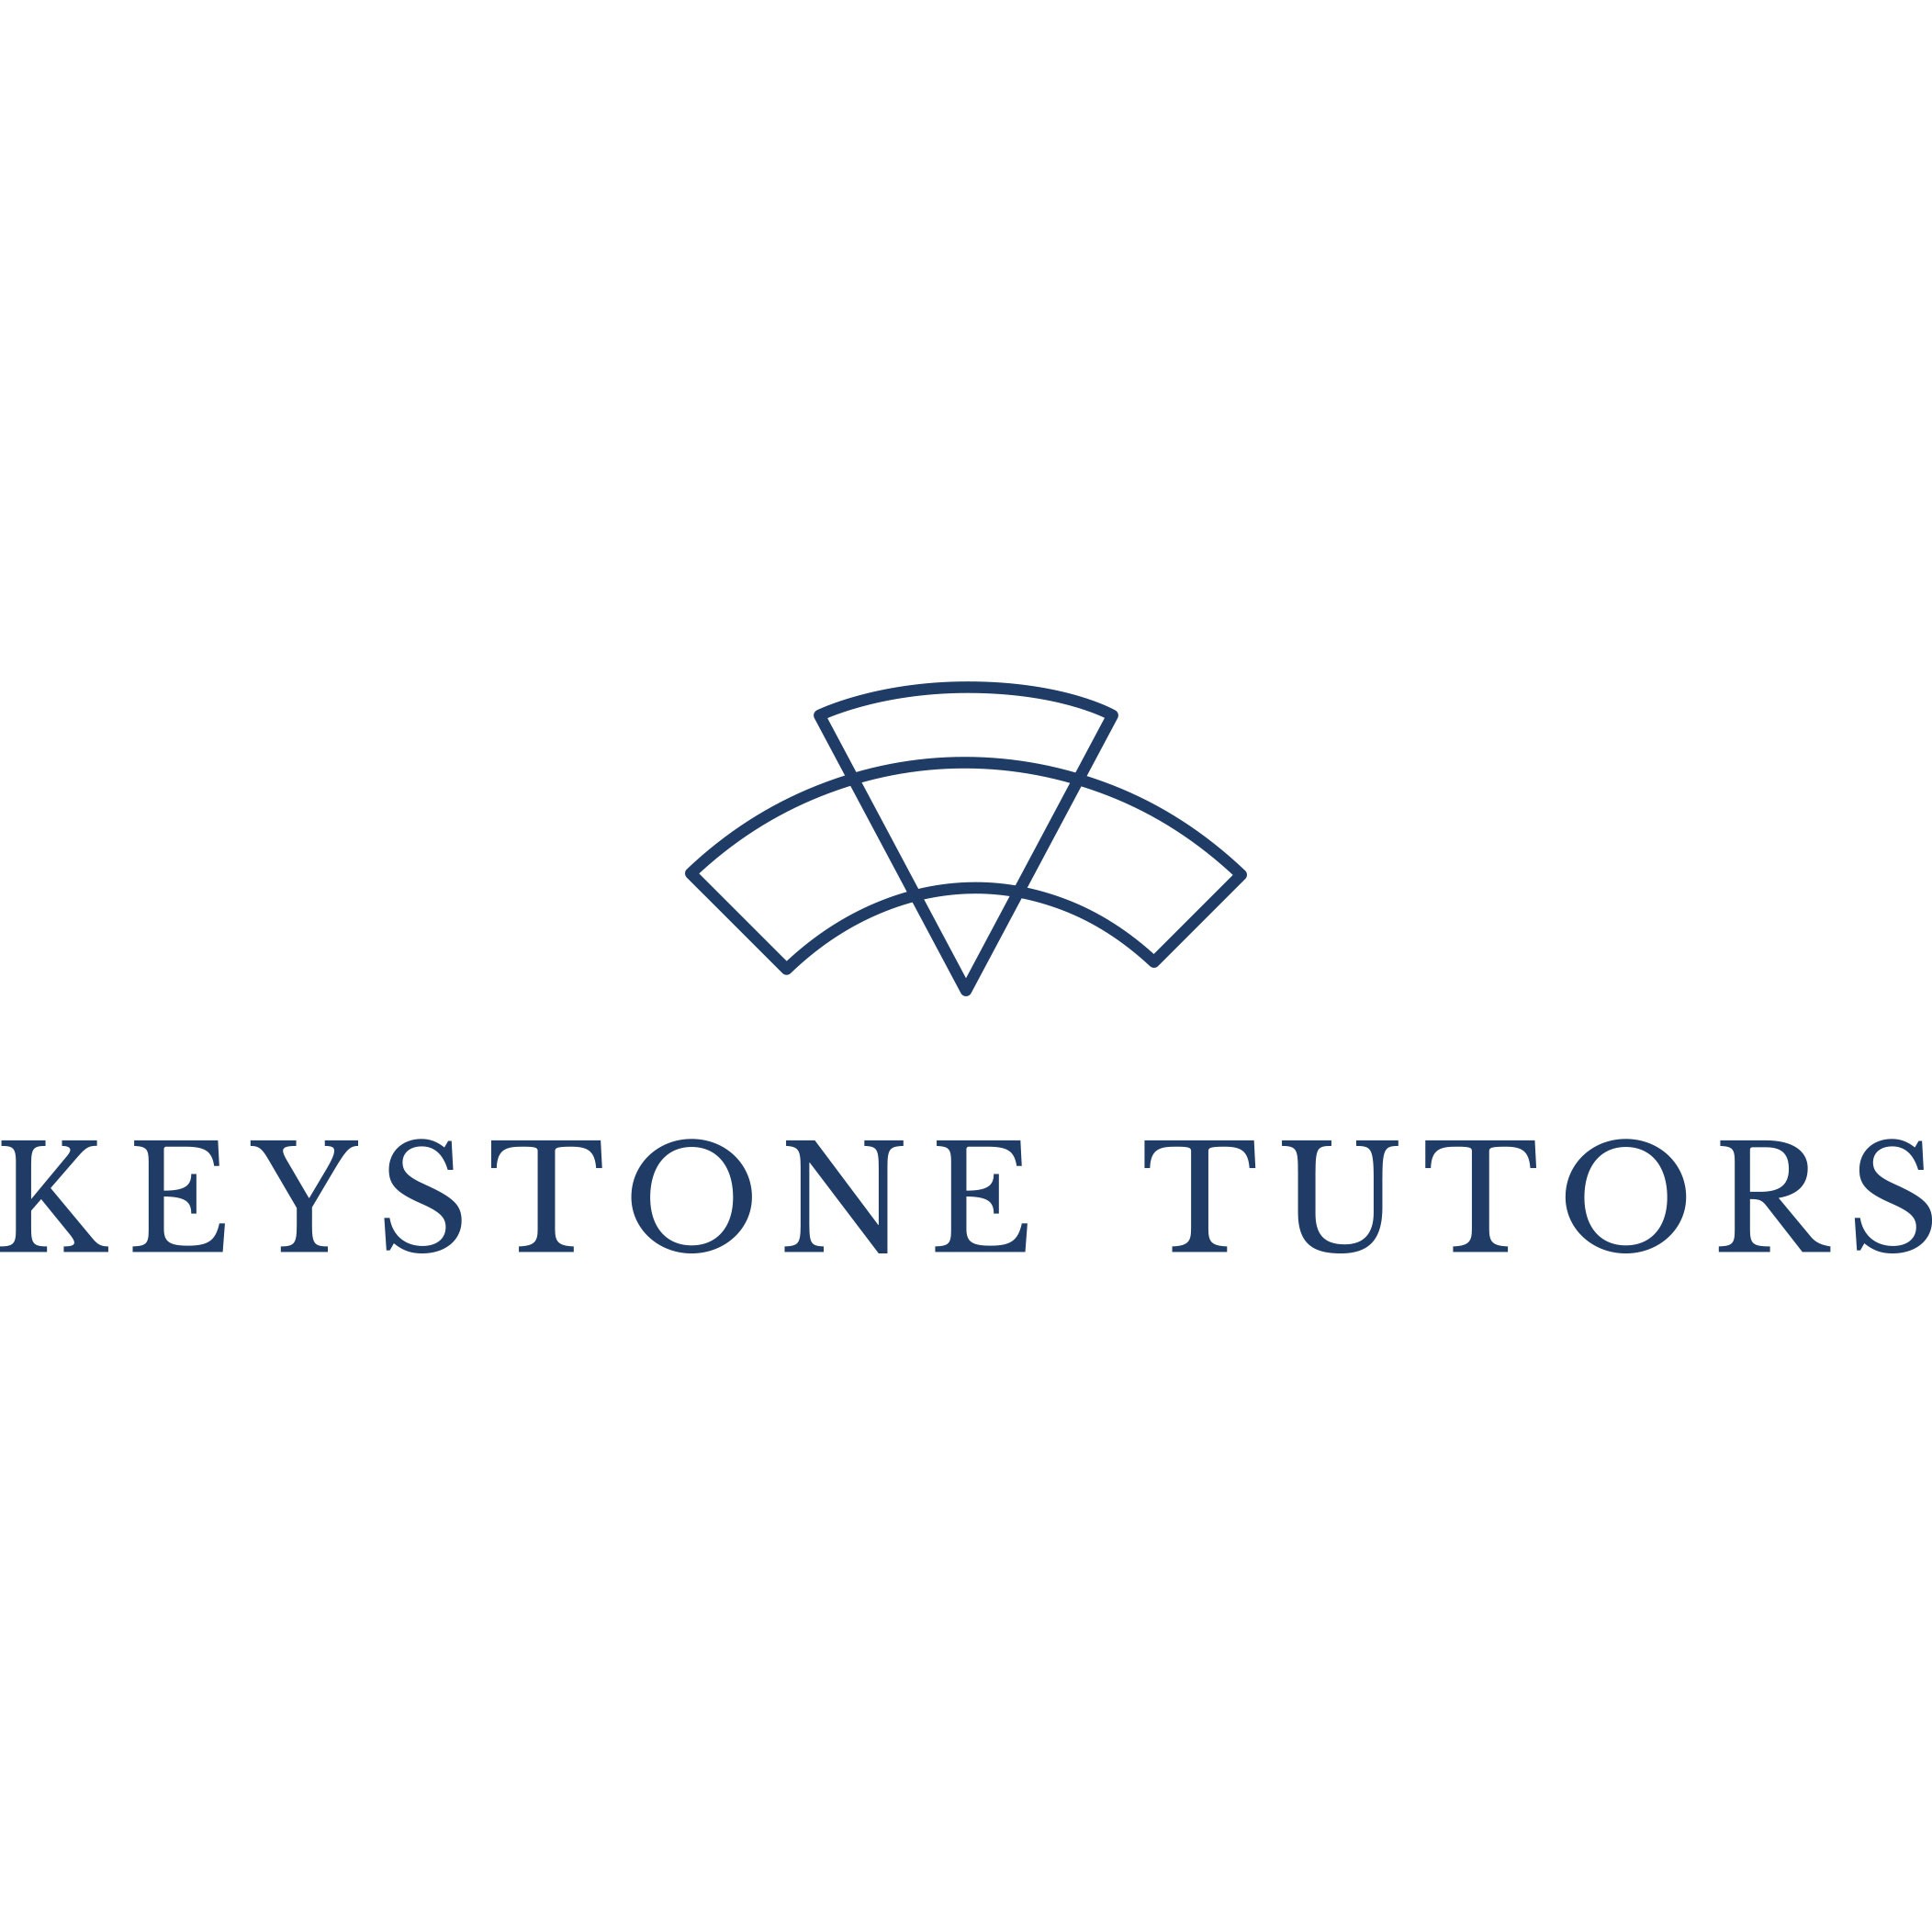 Keystone Tutors - Logo